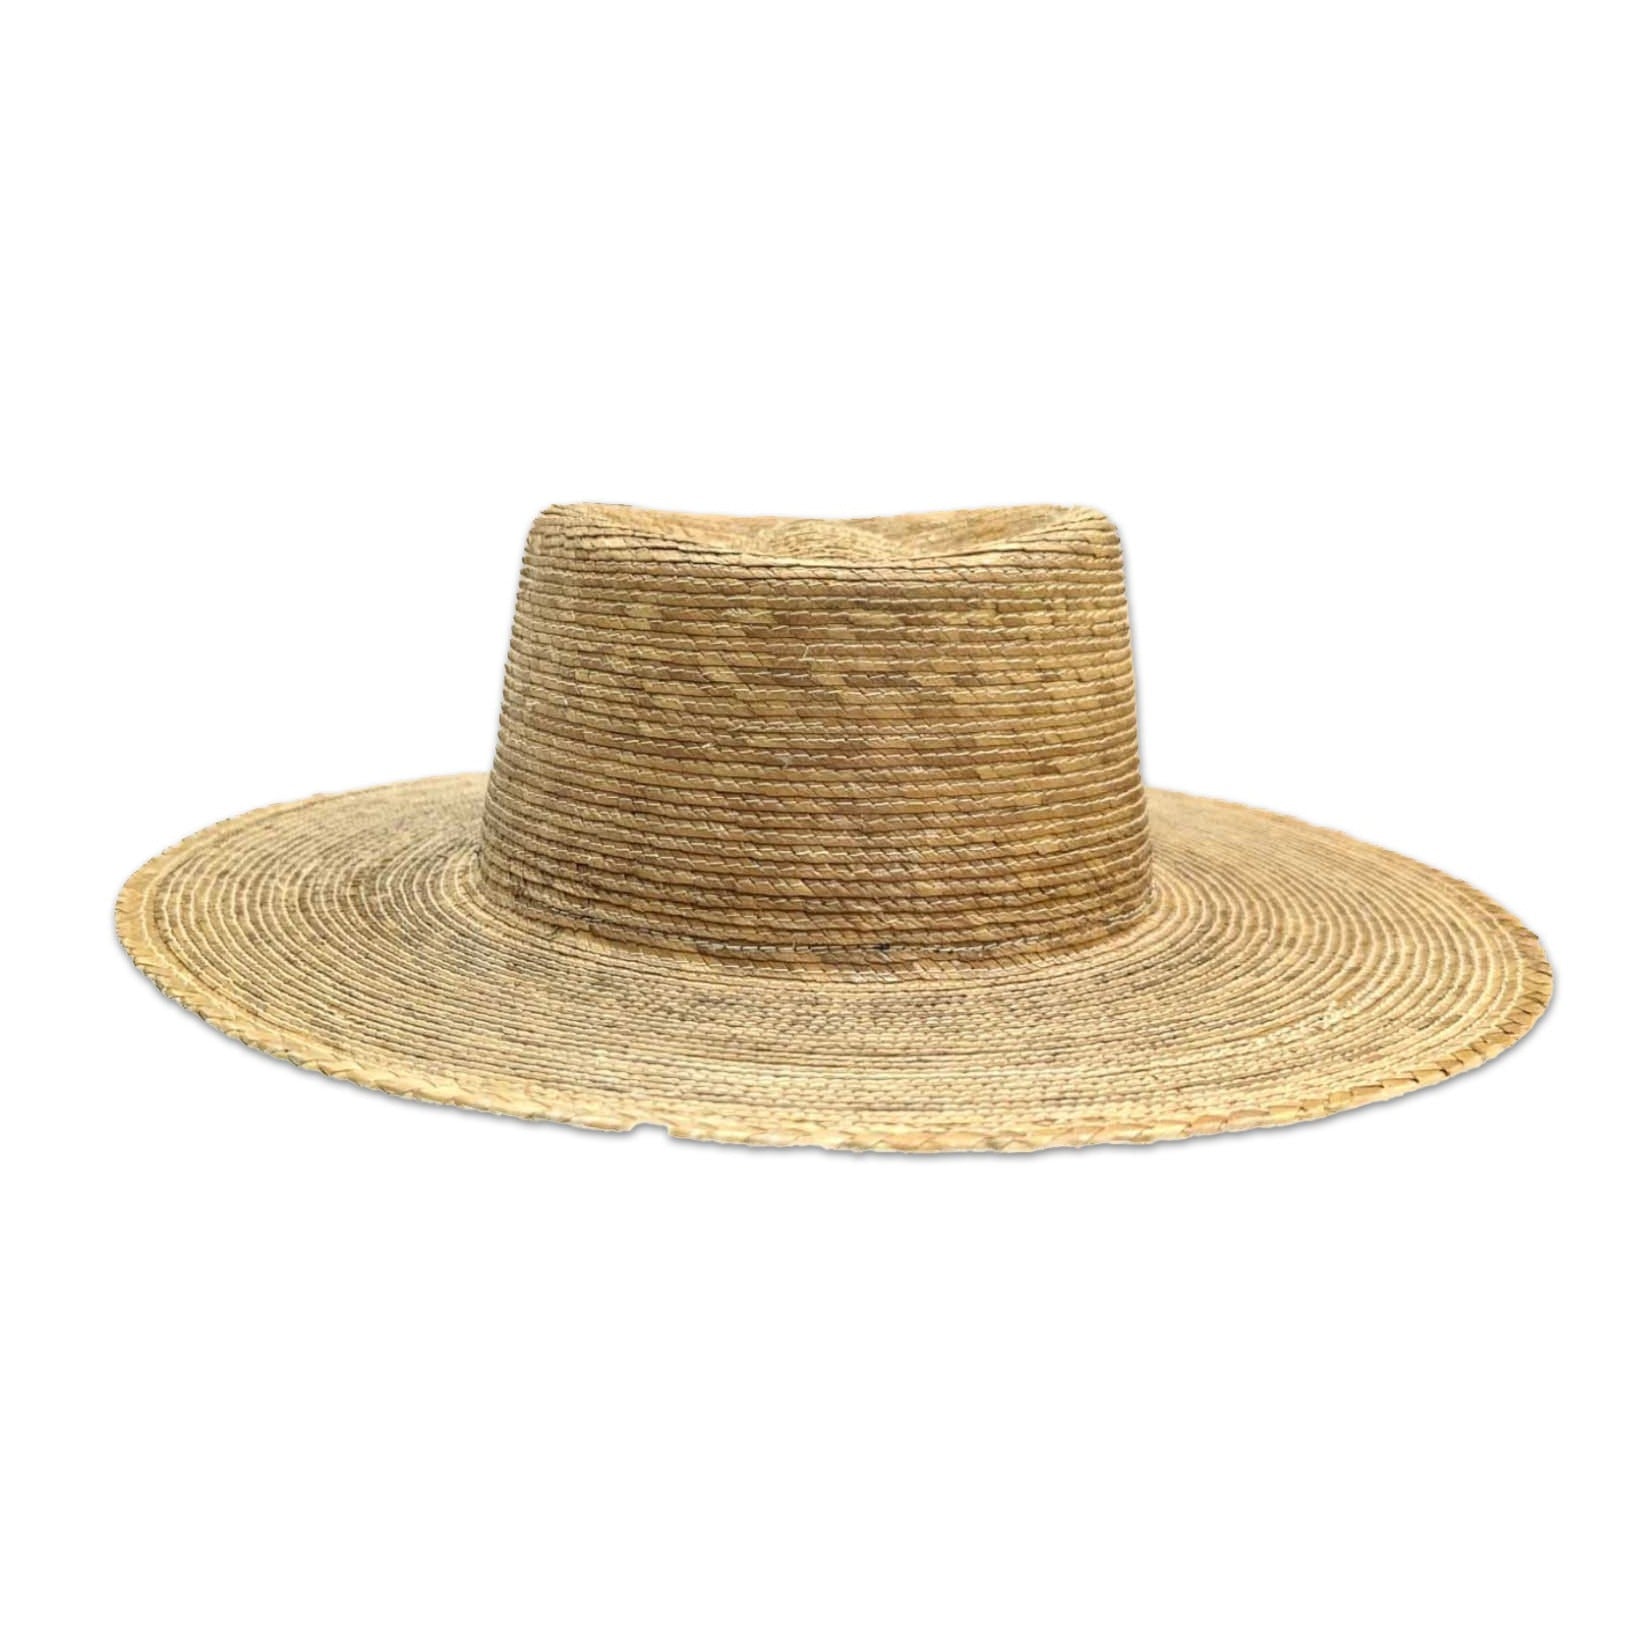 Handmade Straw Boater Hat - 3